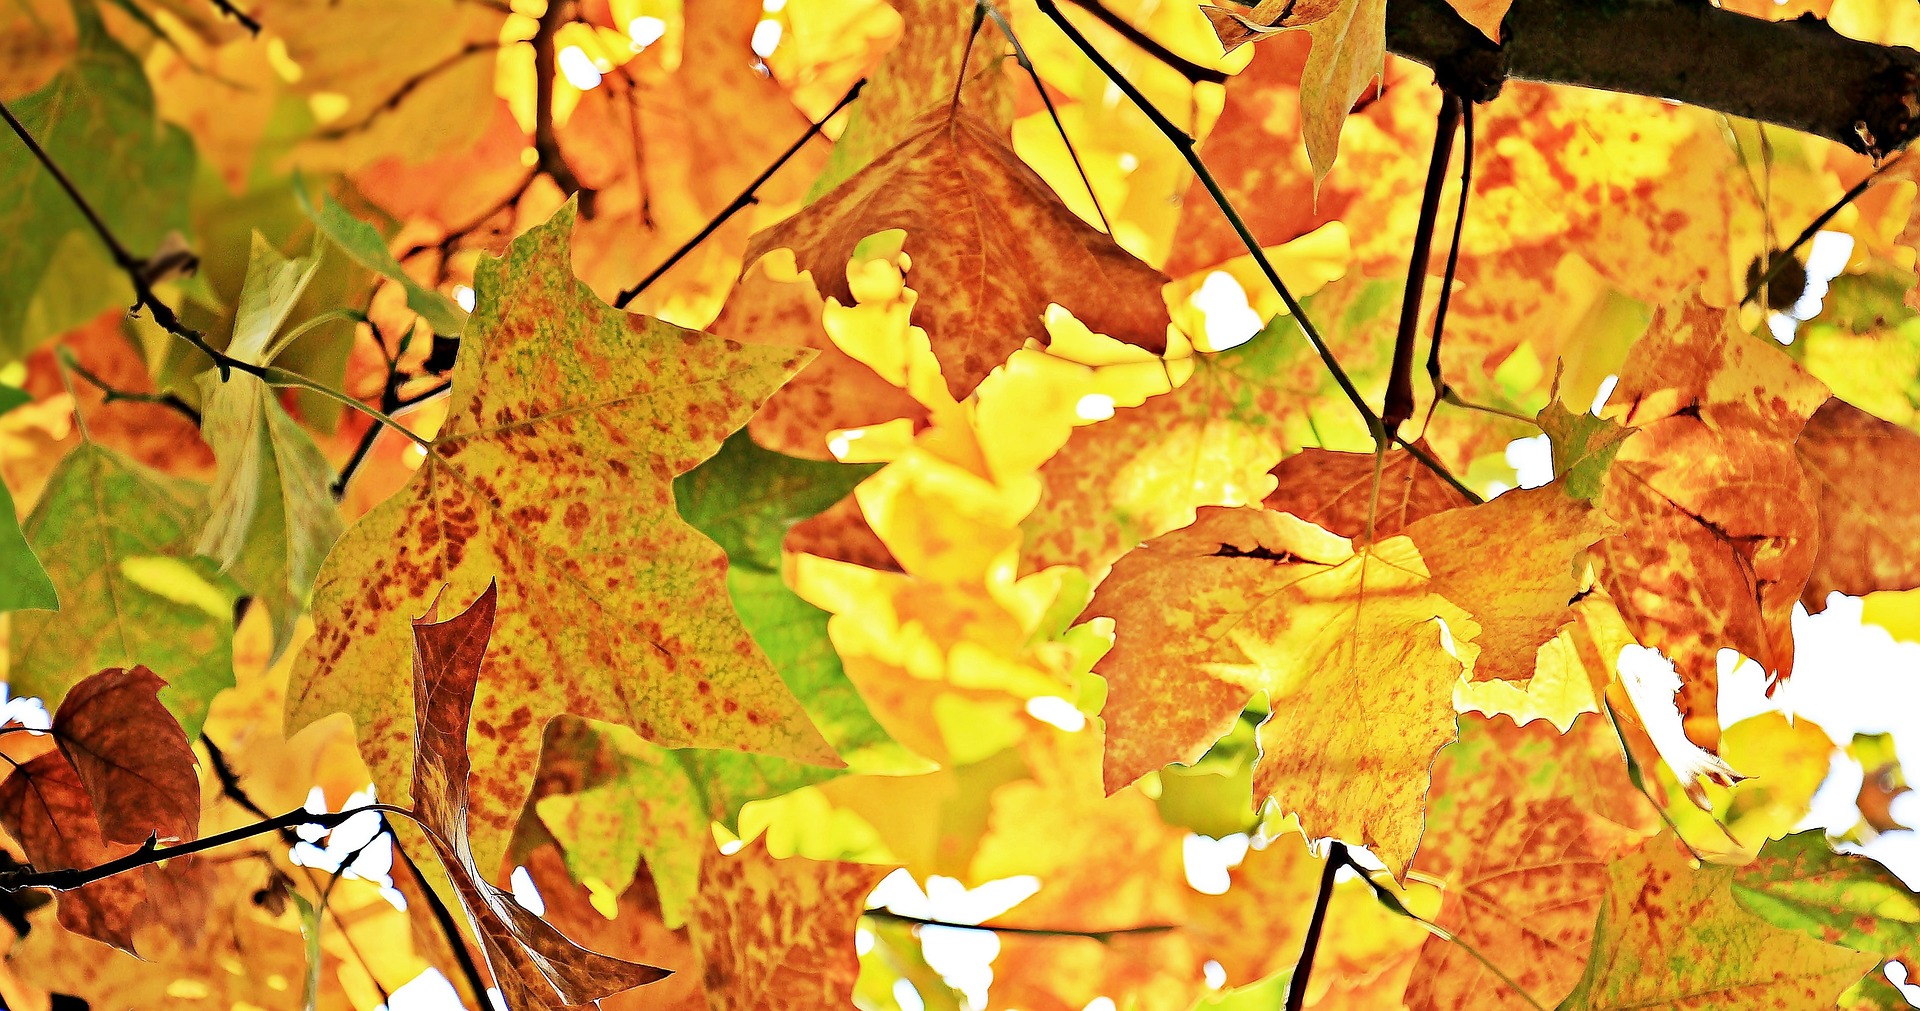 chestnut-leaves-gbc498189a_1920